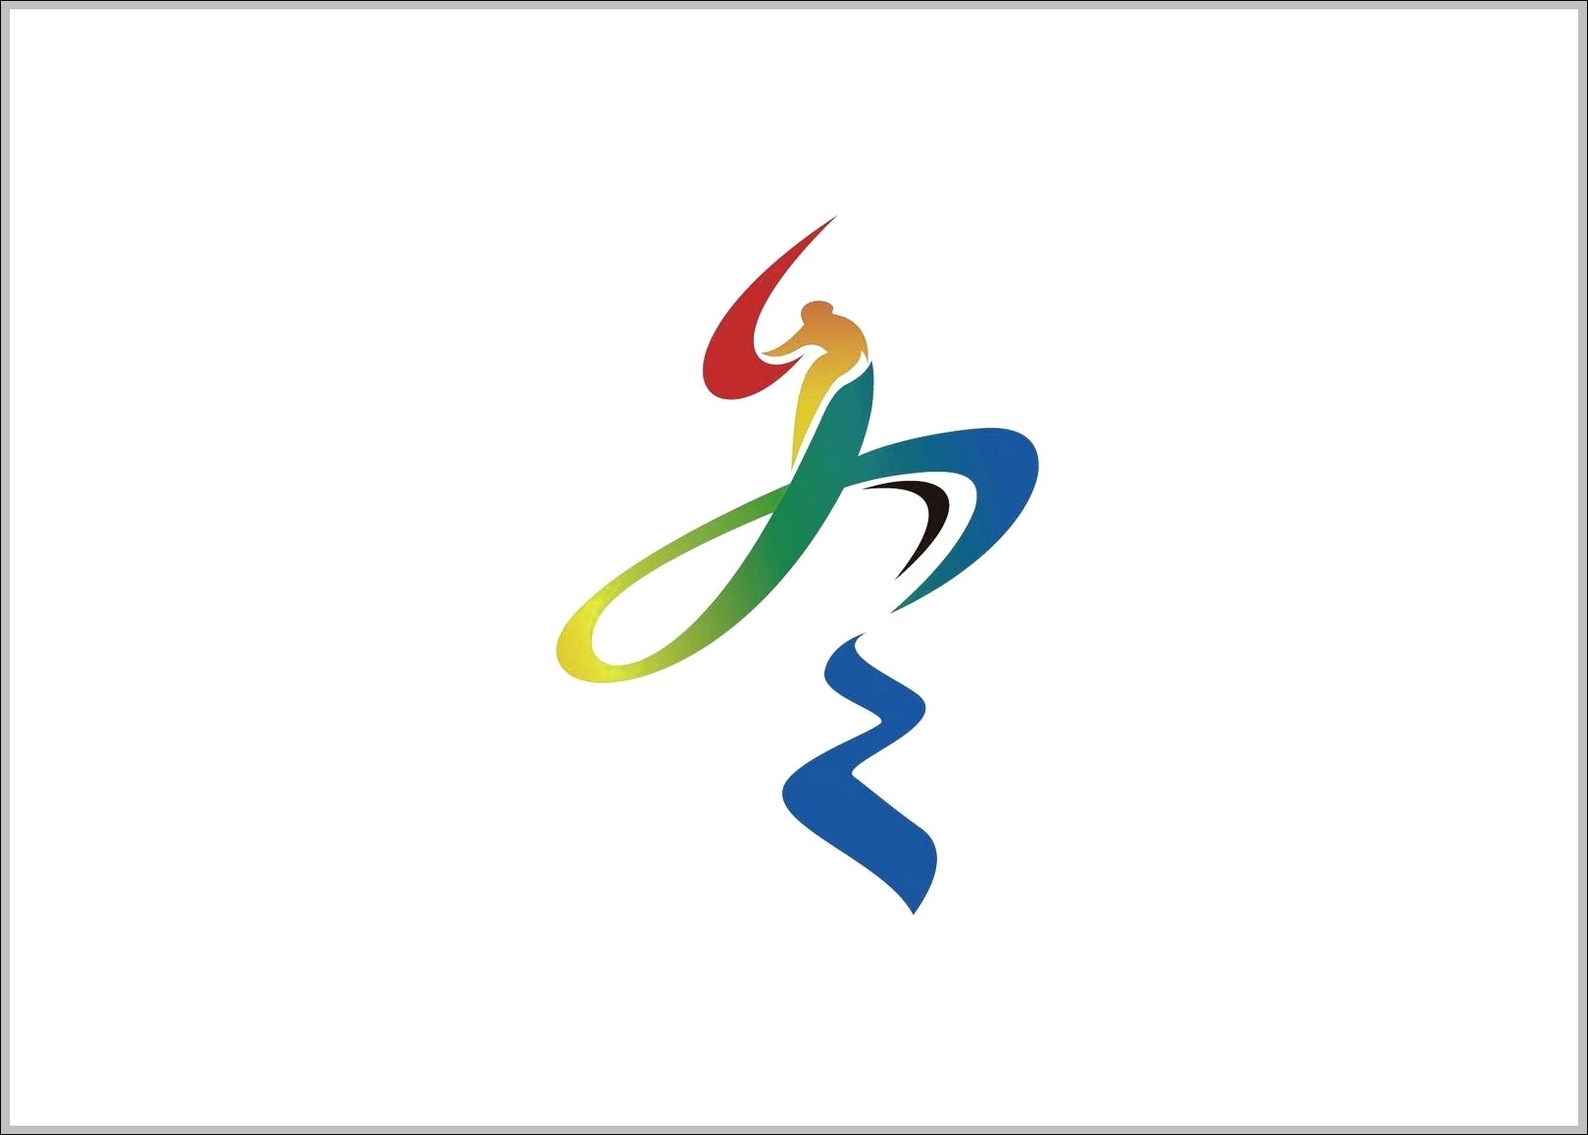 Beijing 2022 Bid logo